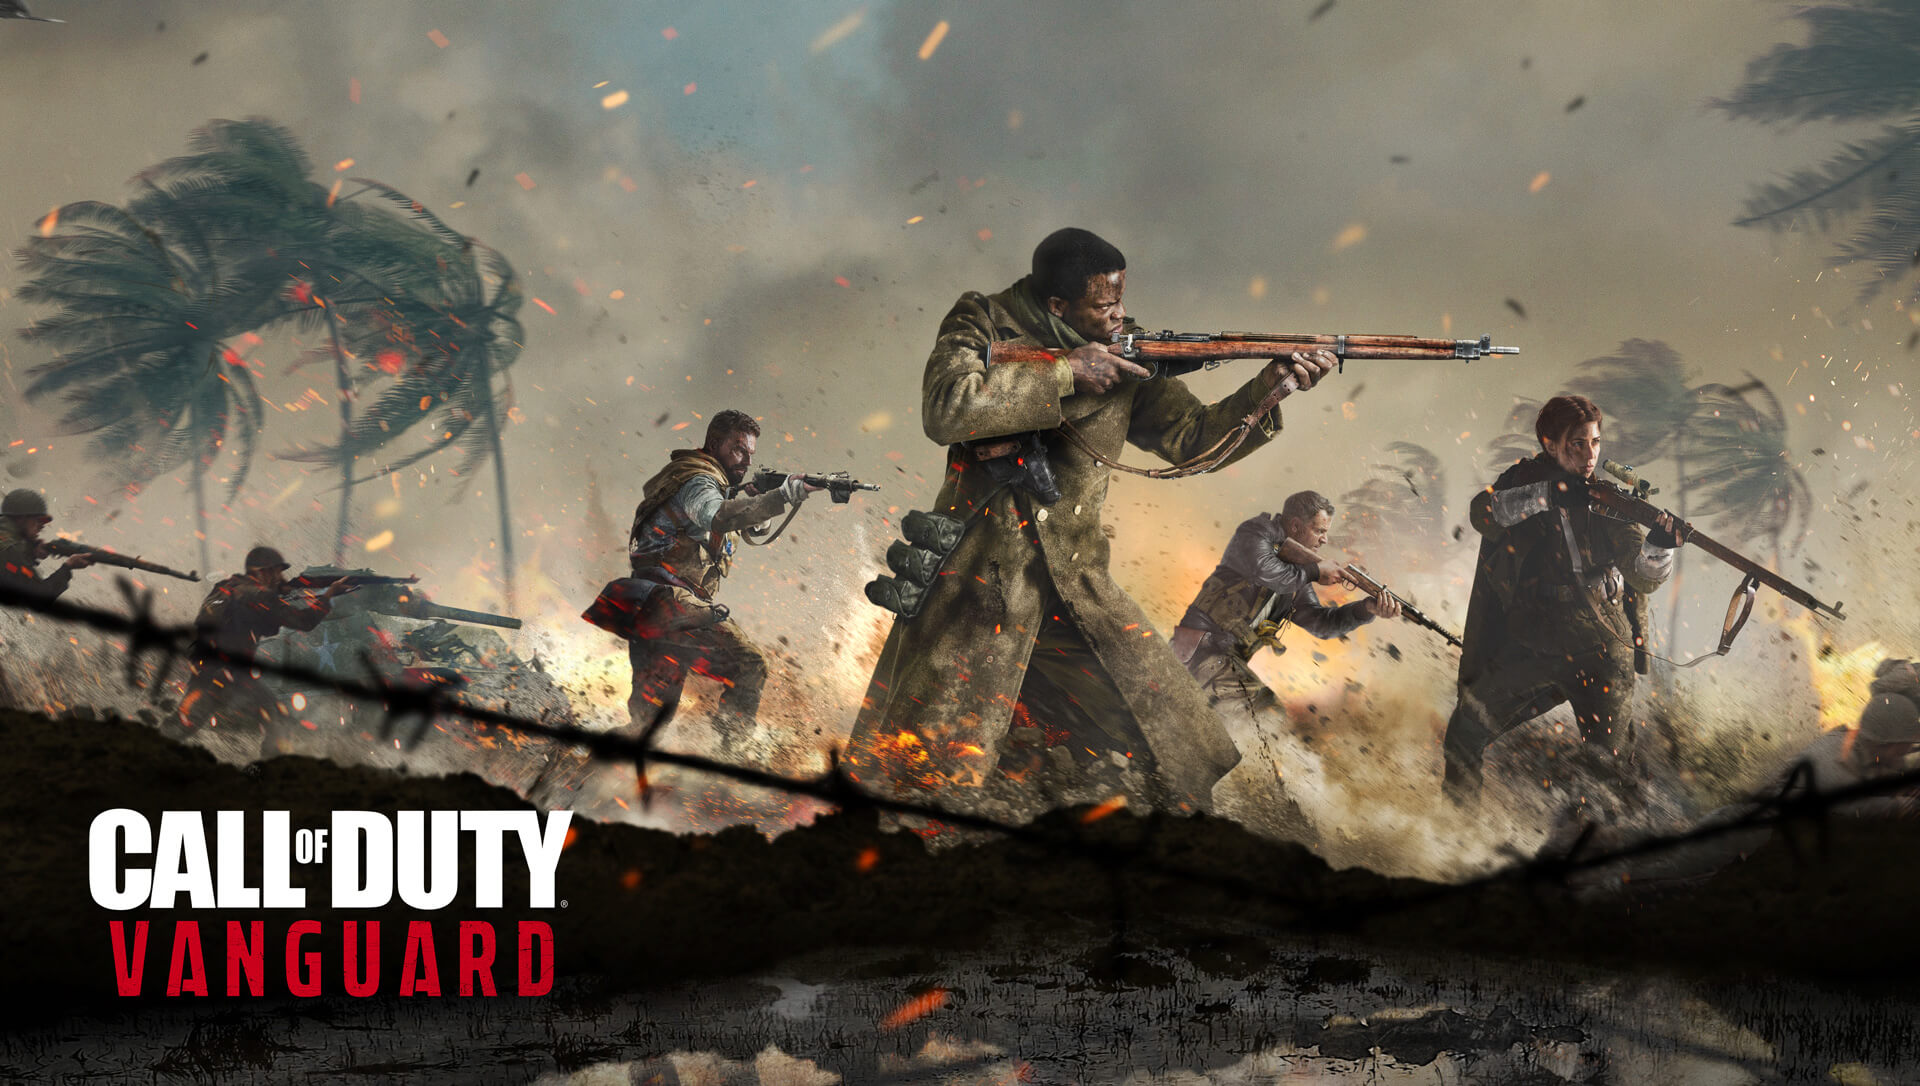 Alpha de Call of Duty Vanguard tampoco muestra el logo de Activision